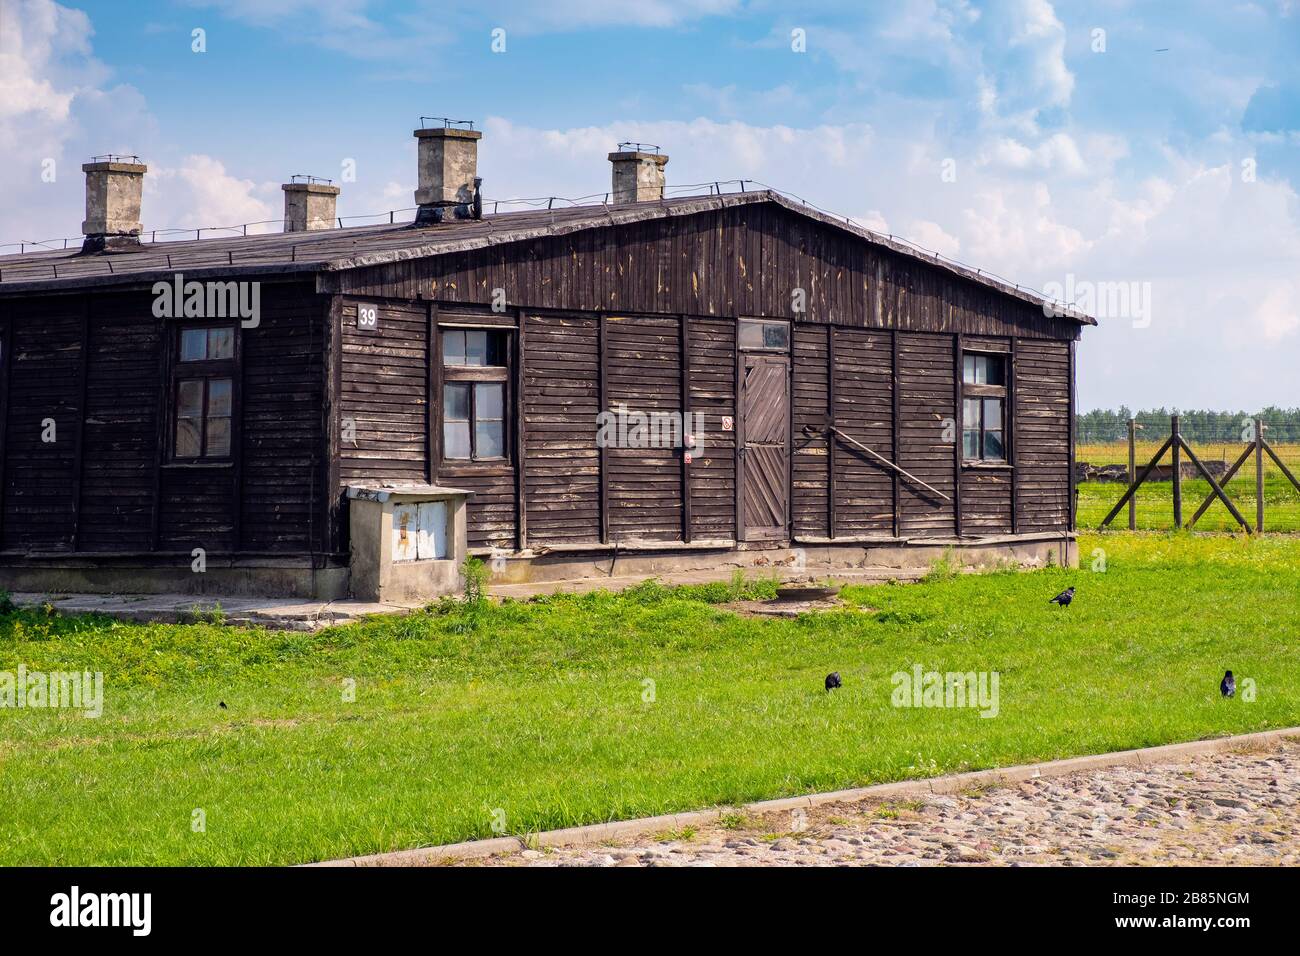 Lublin, Lubelskie/Polen - 2019/08/17: Kasernen und Zäune des Konzentrationslagers Majdanek KL Lublin - Konzentrationslager Lublin Stockfoto